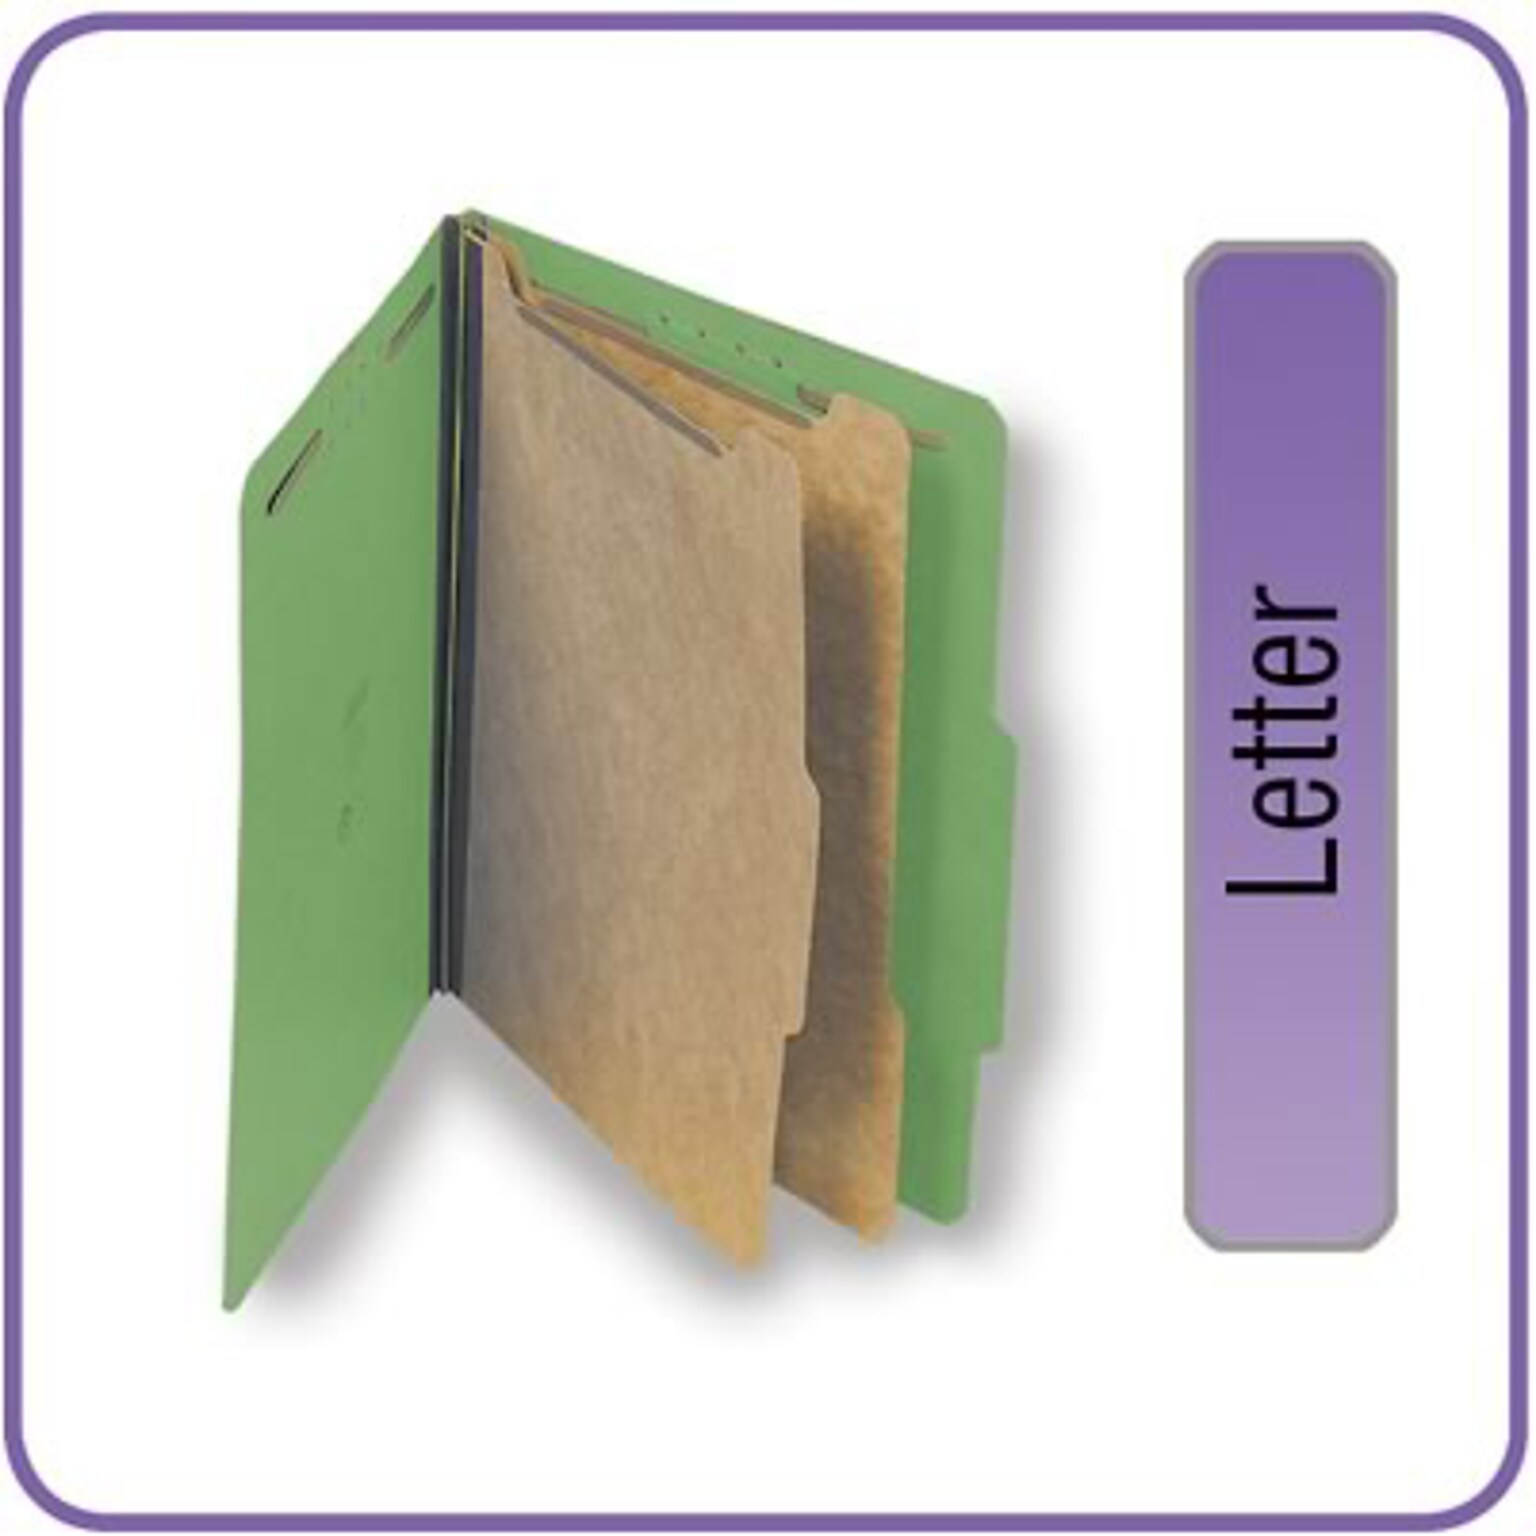 Quill Brand® 2/5-Cut Tab Pressboard Classification File Folders, 2-Partitions, 6-Fasteners, Letter, Green, 15/Box (738034)